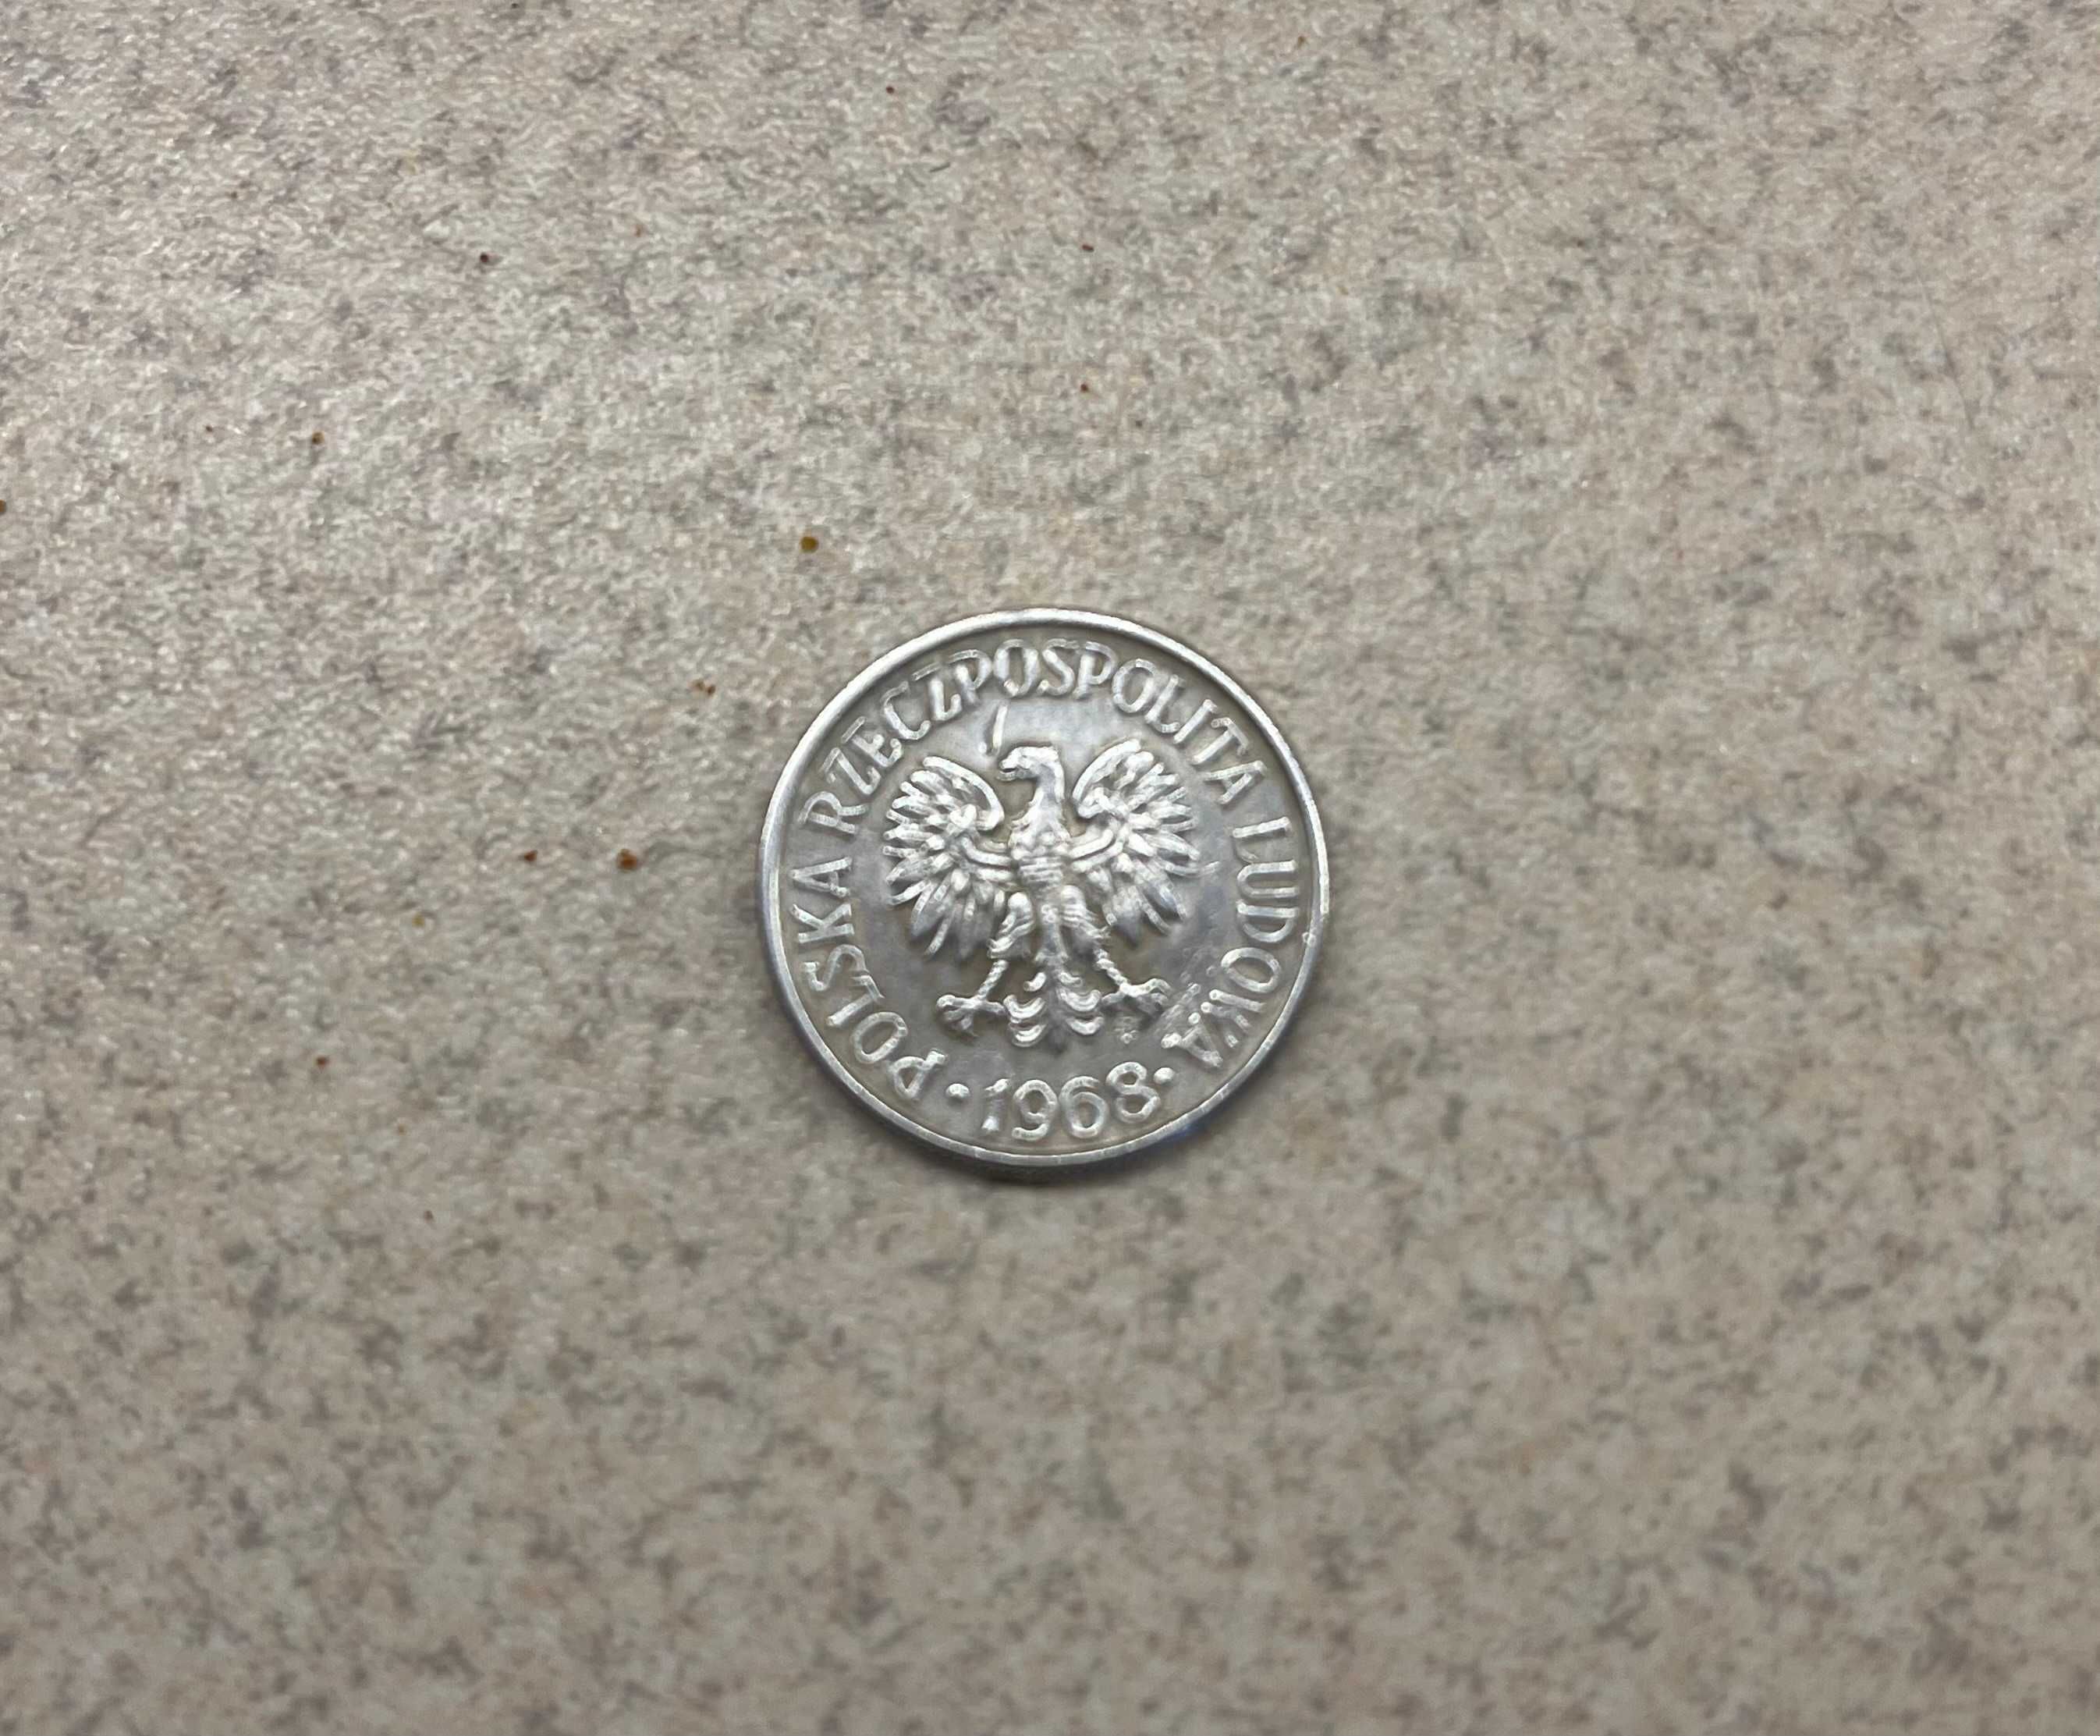 Moneta 50 groszy z roku 1968 OB035